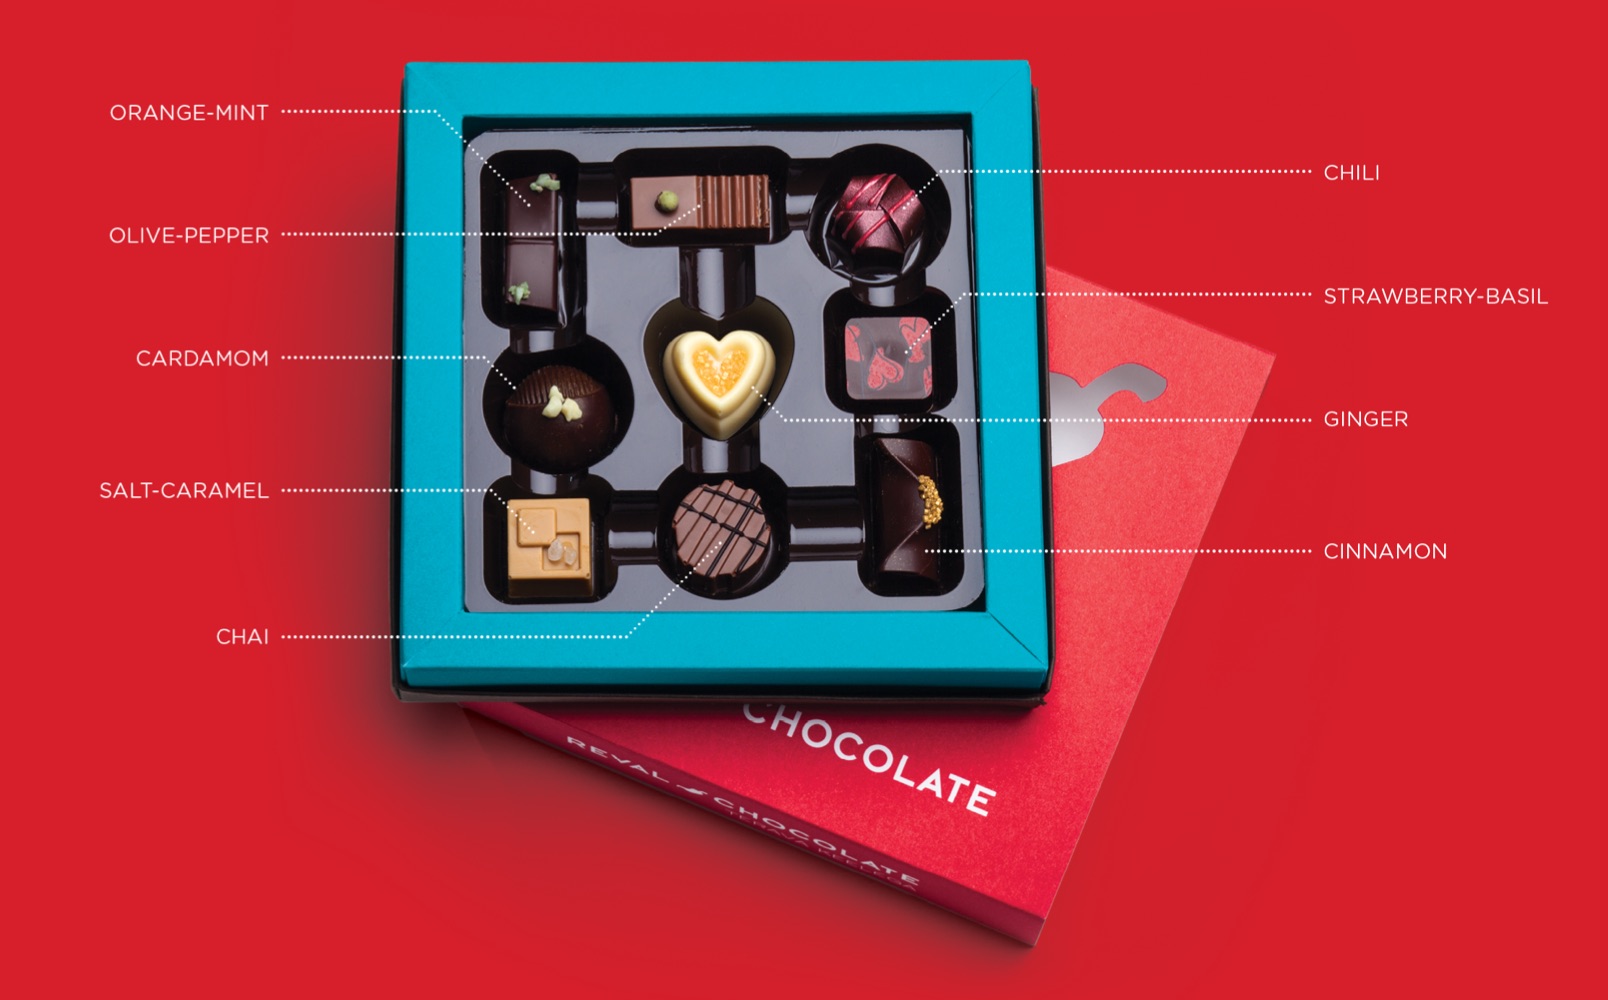 thiết kế bao bì sản phẩm của Reval Chocolate With a sharp tongue